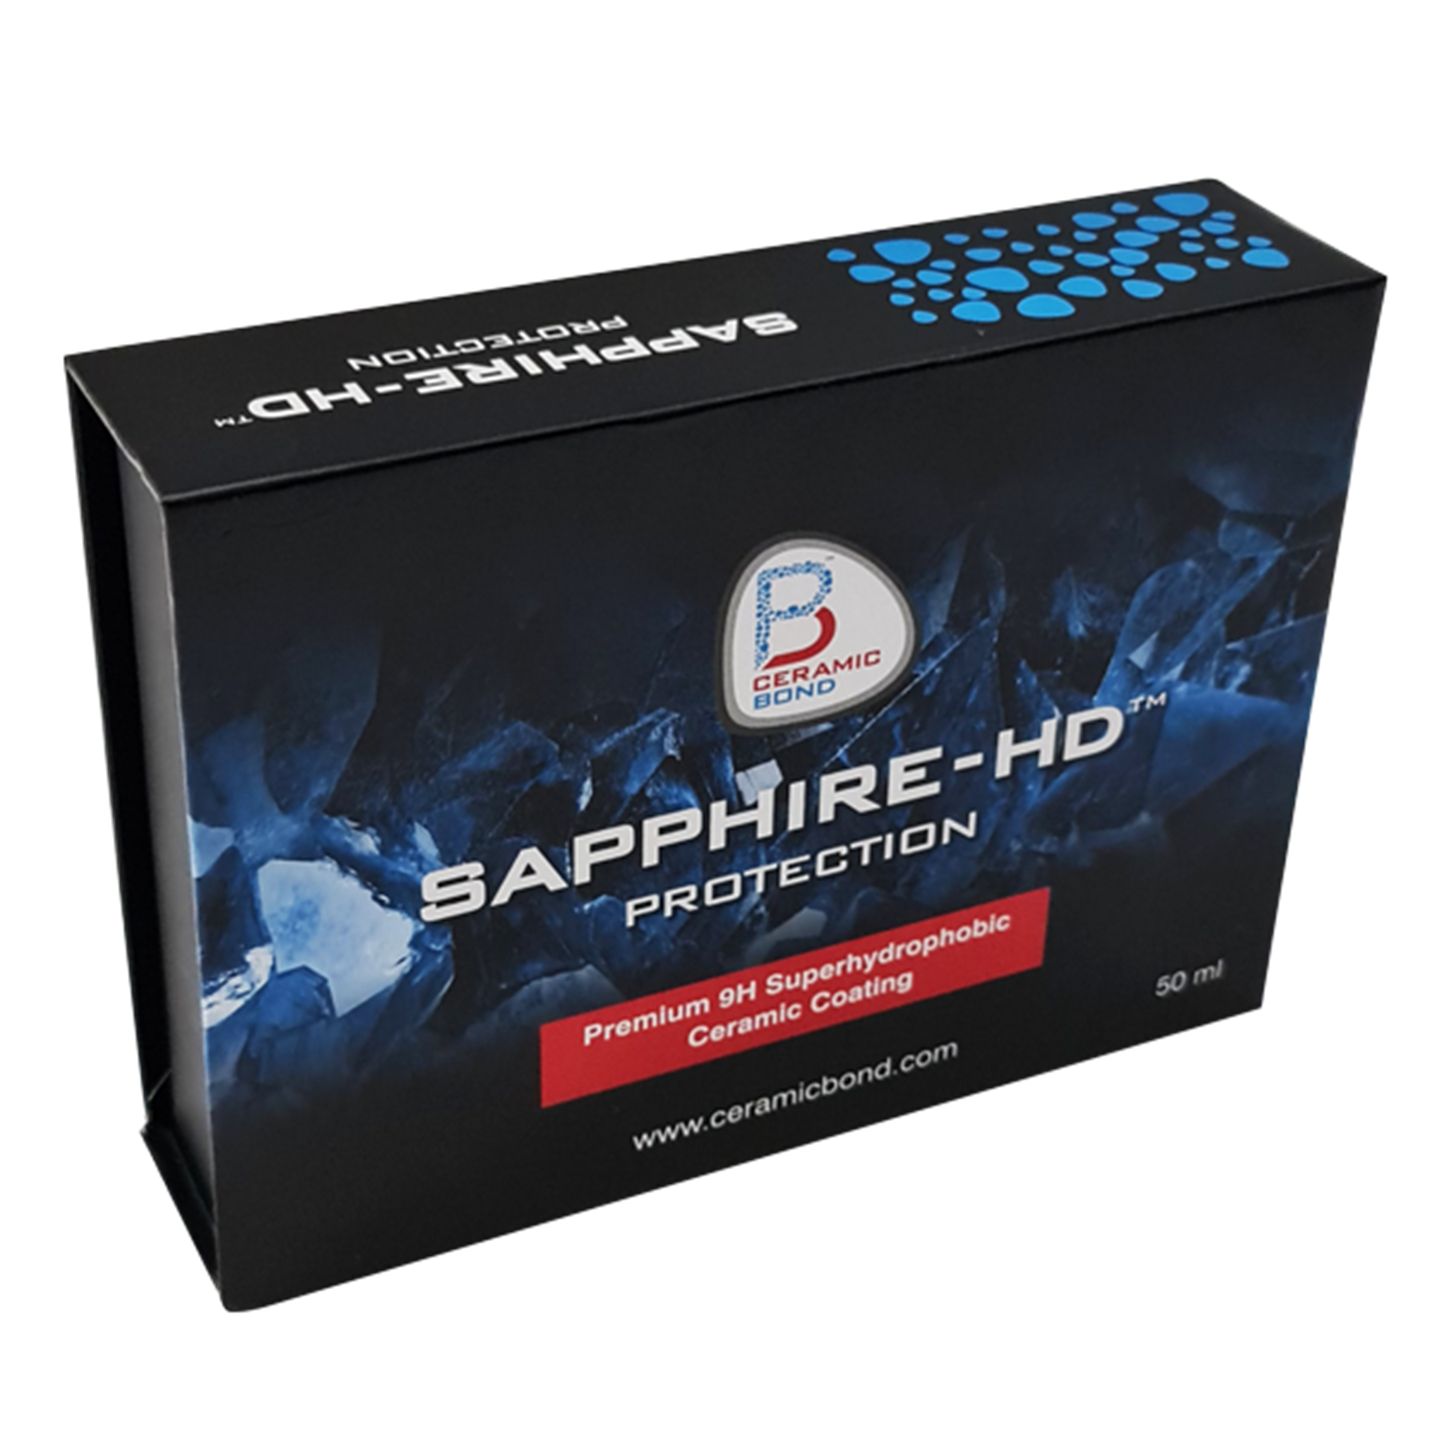 SAPPHIRE-HD (Kit)